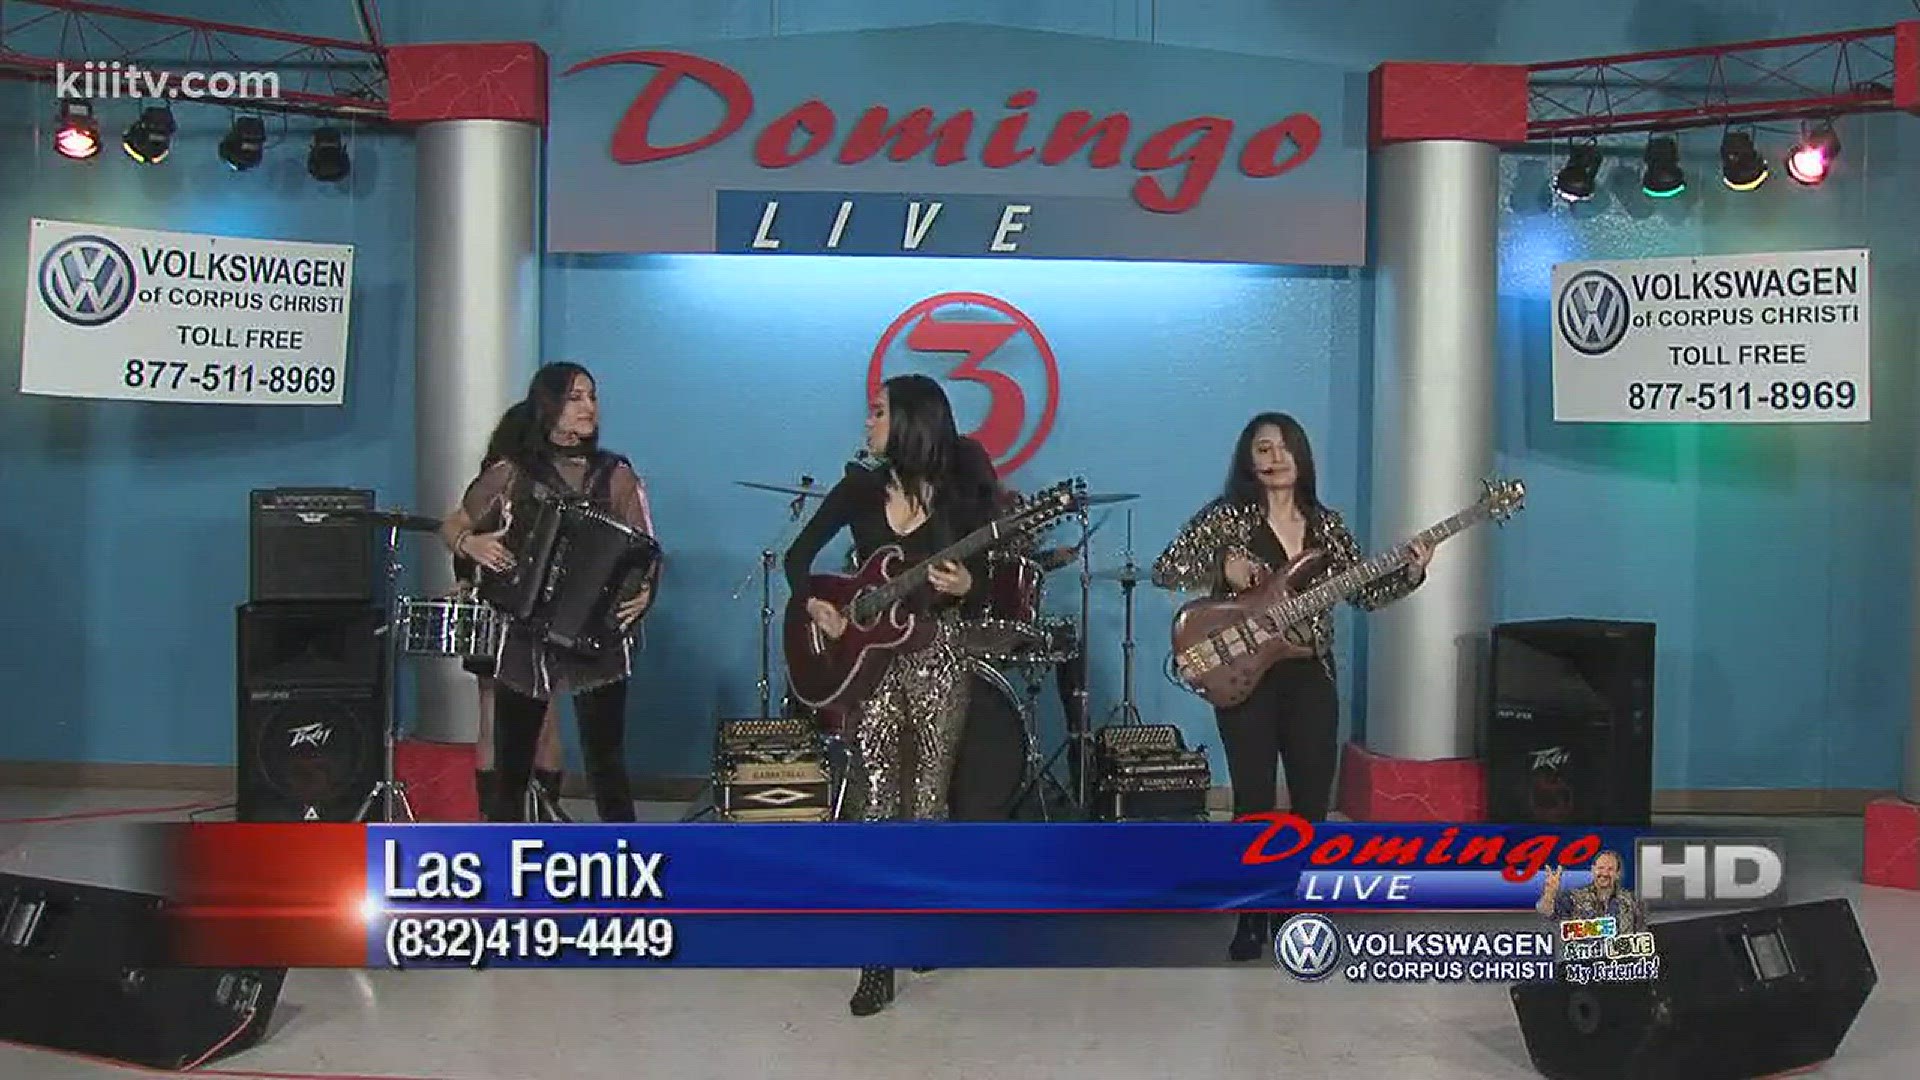 Las Fenix Performing "Dejala Ir" on Domingo Live!